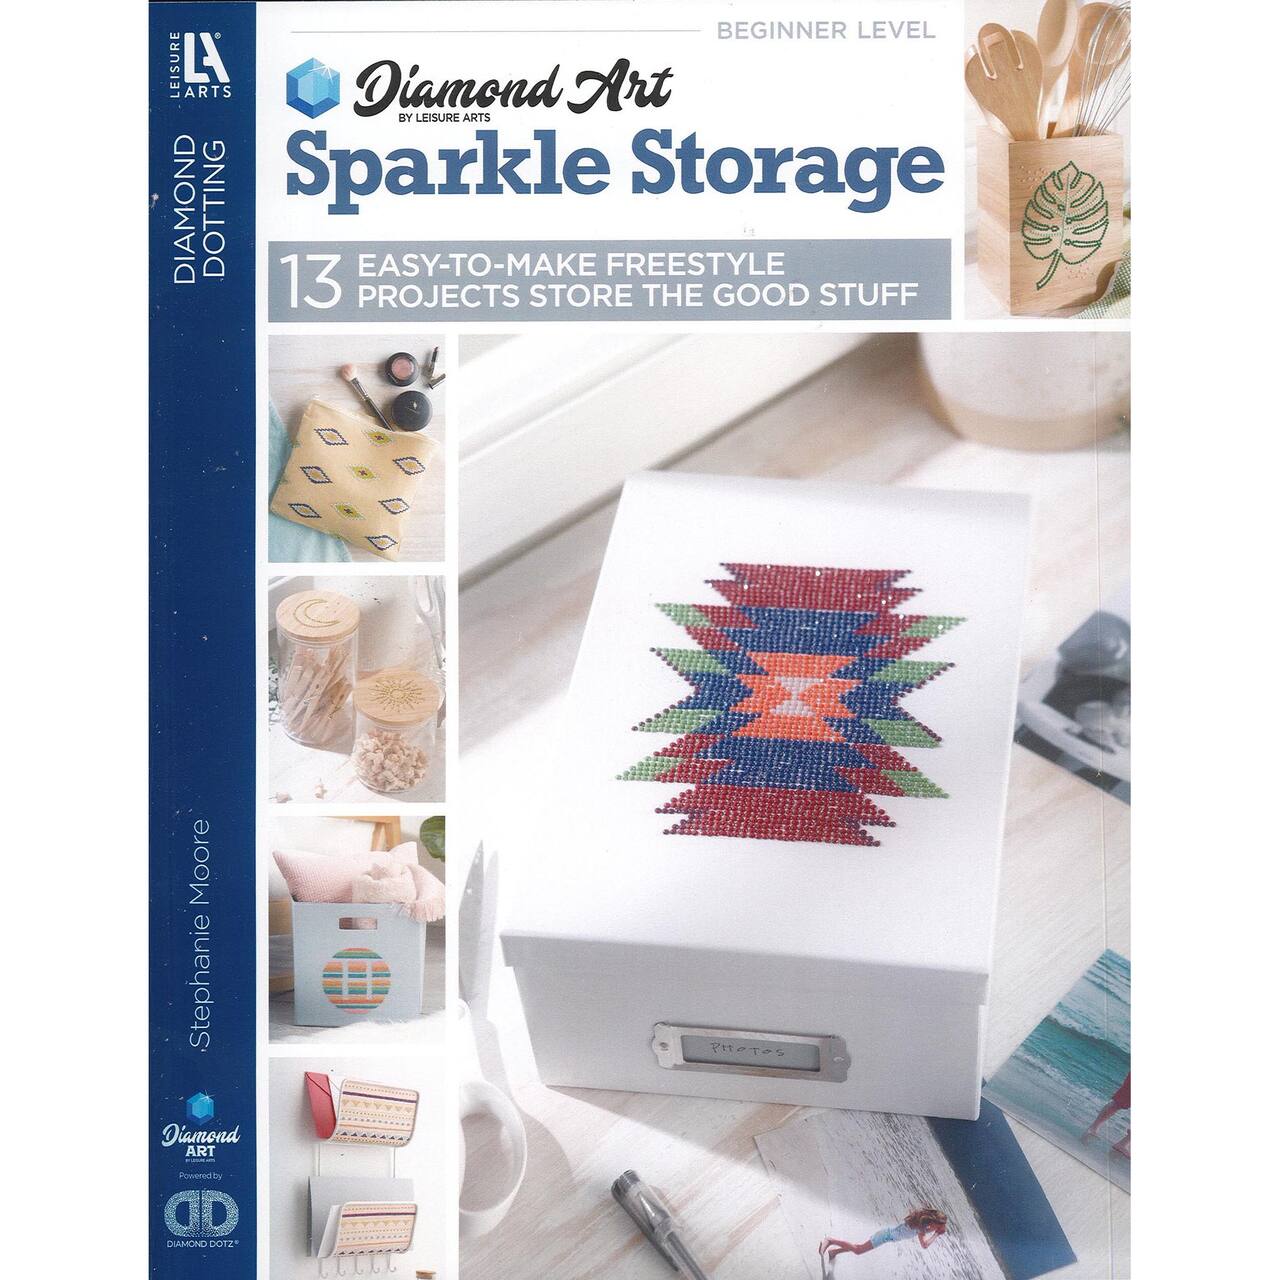 Diamond Art Sparkle Storage Book